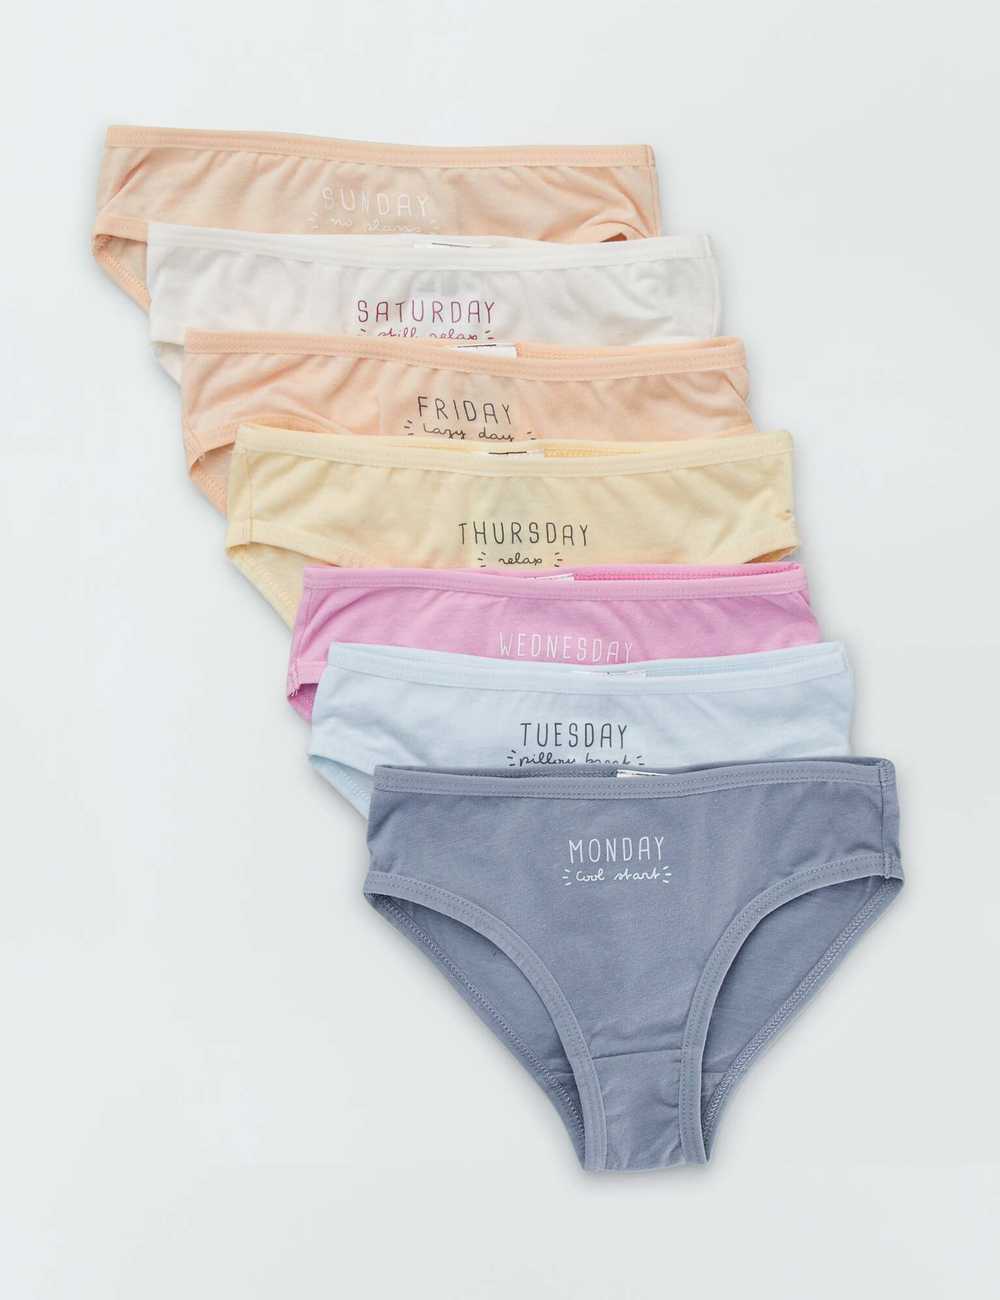 Buy Girls' Underwear Online in Dubai & UAE